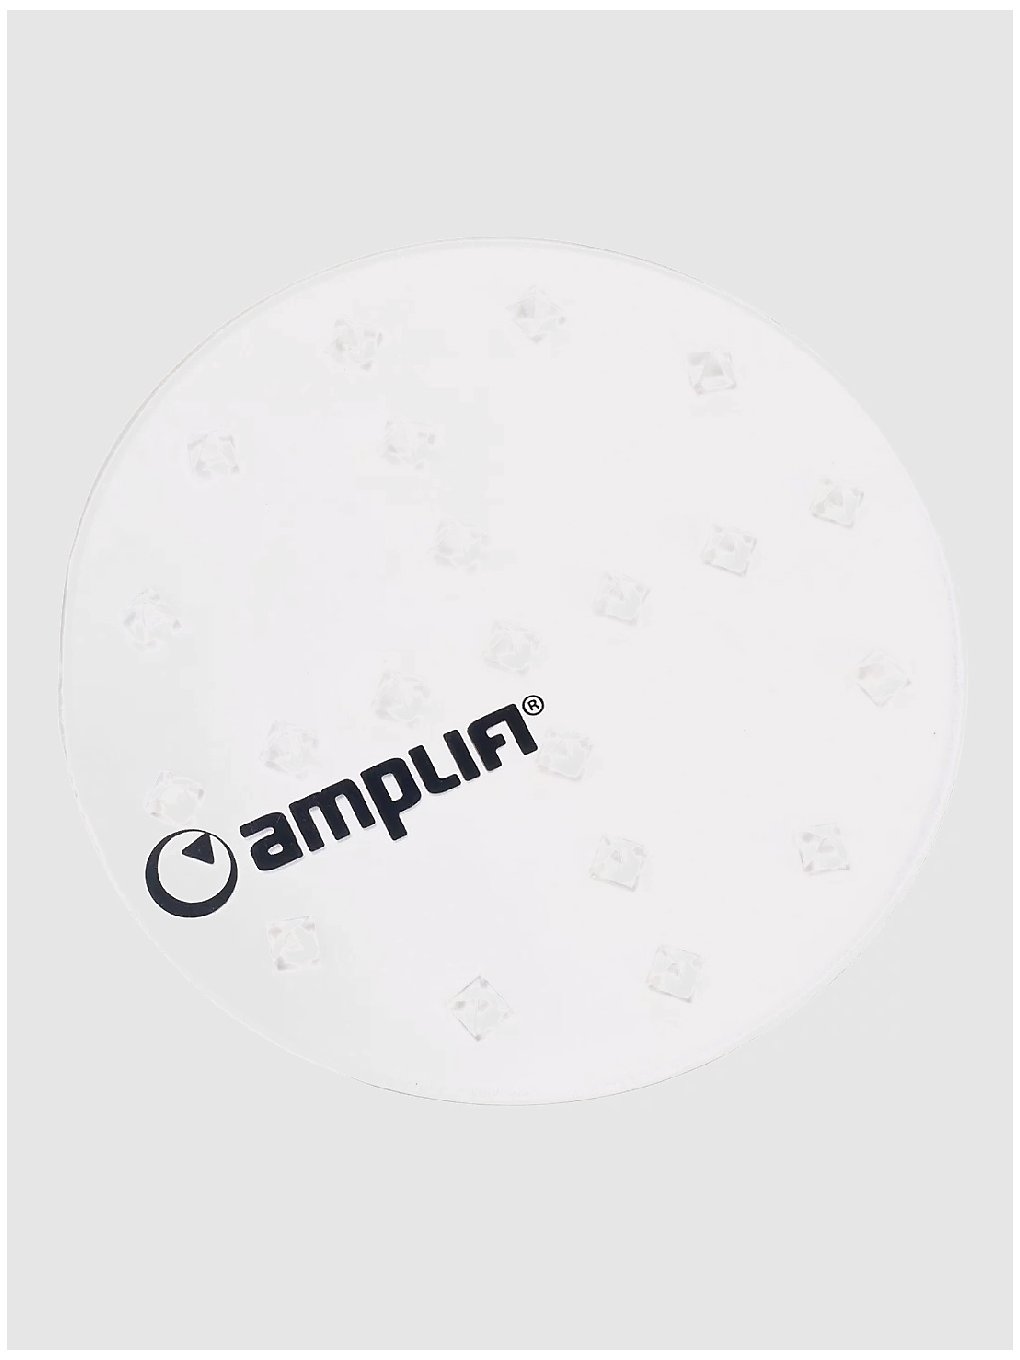 Amplifi Round Stomp Pad clear kaufen